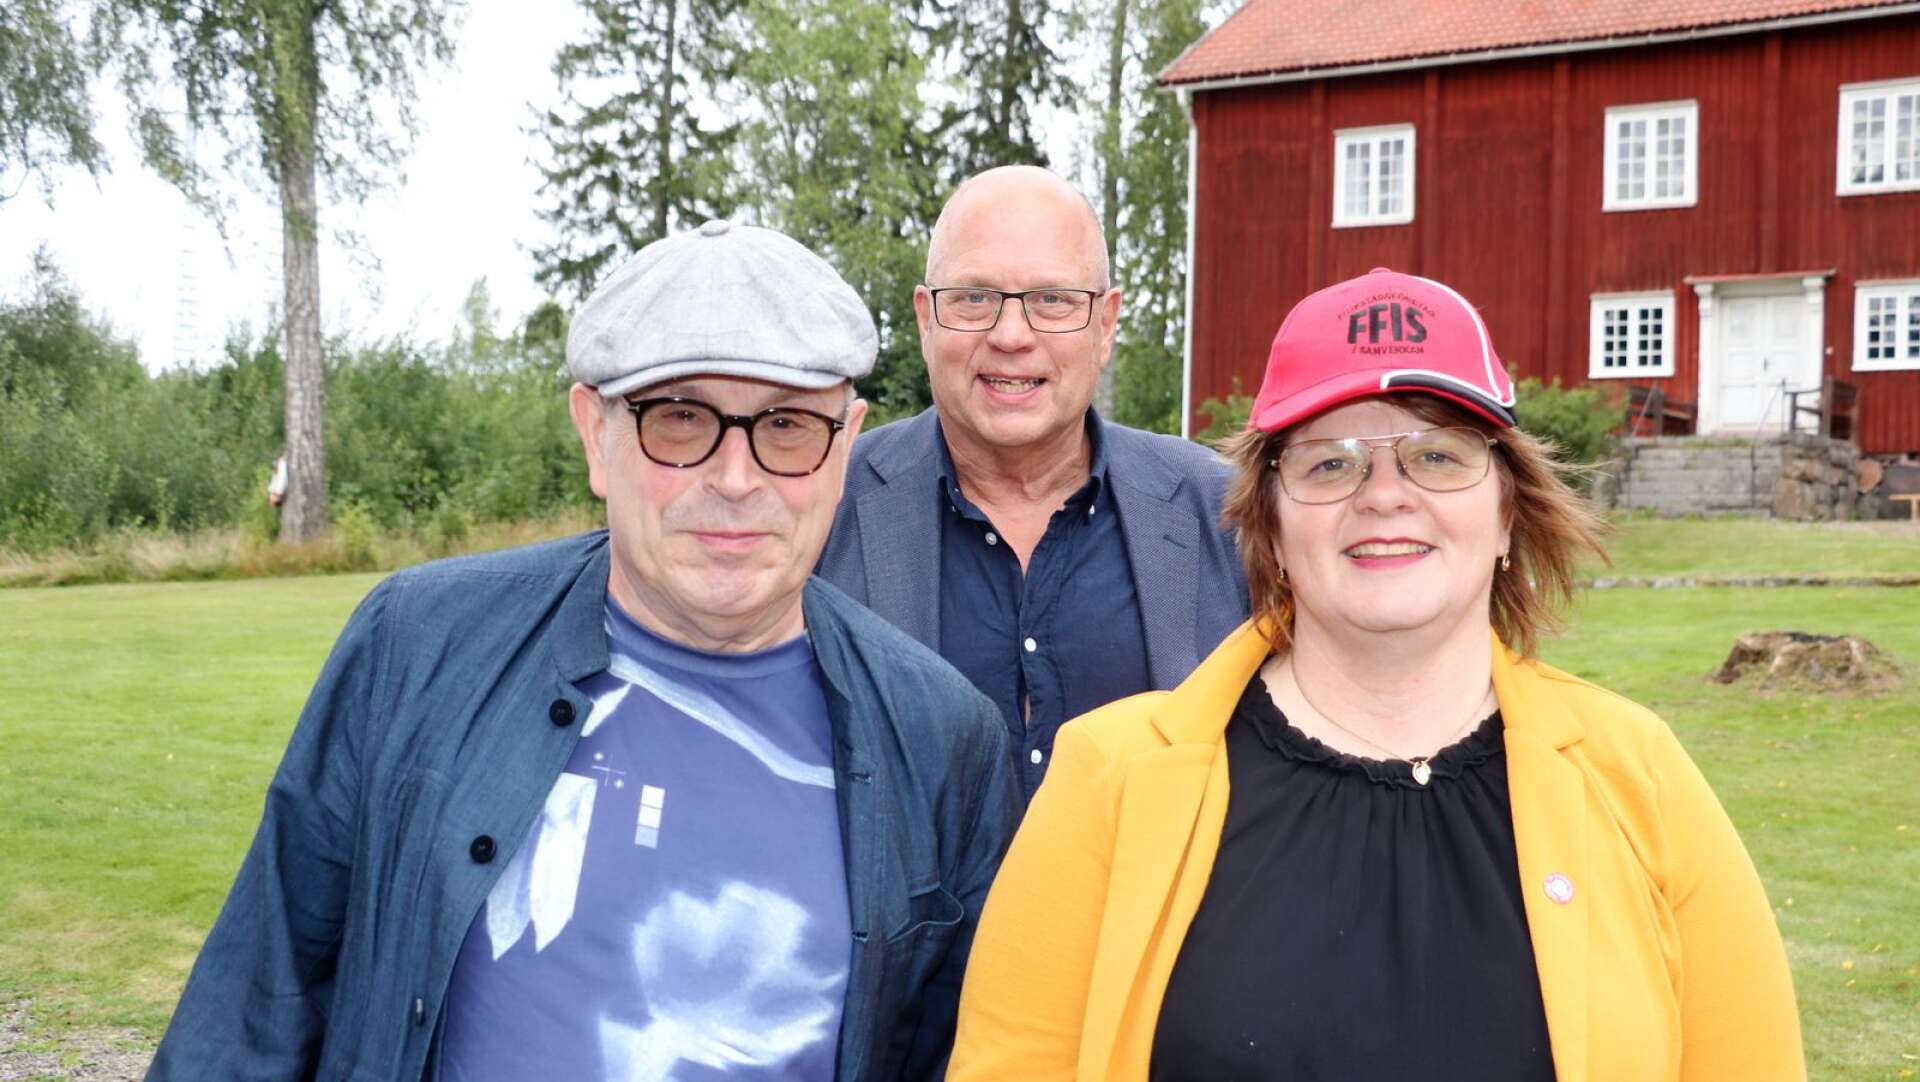 Jan Scherman, Filipstadsambassadör, Thomas Jansson, tidigare Filipstadsambassadör, och kommunalrådet Åsa Hååkman Felth (S). 